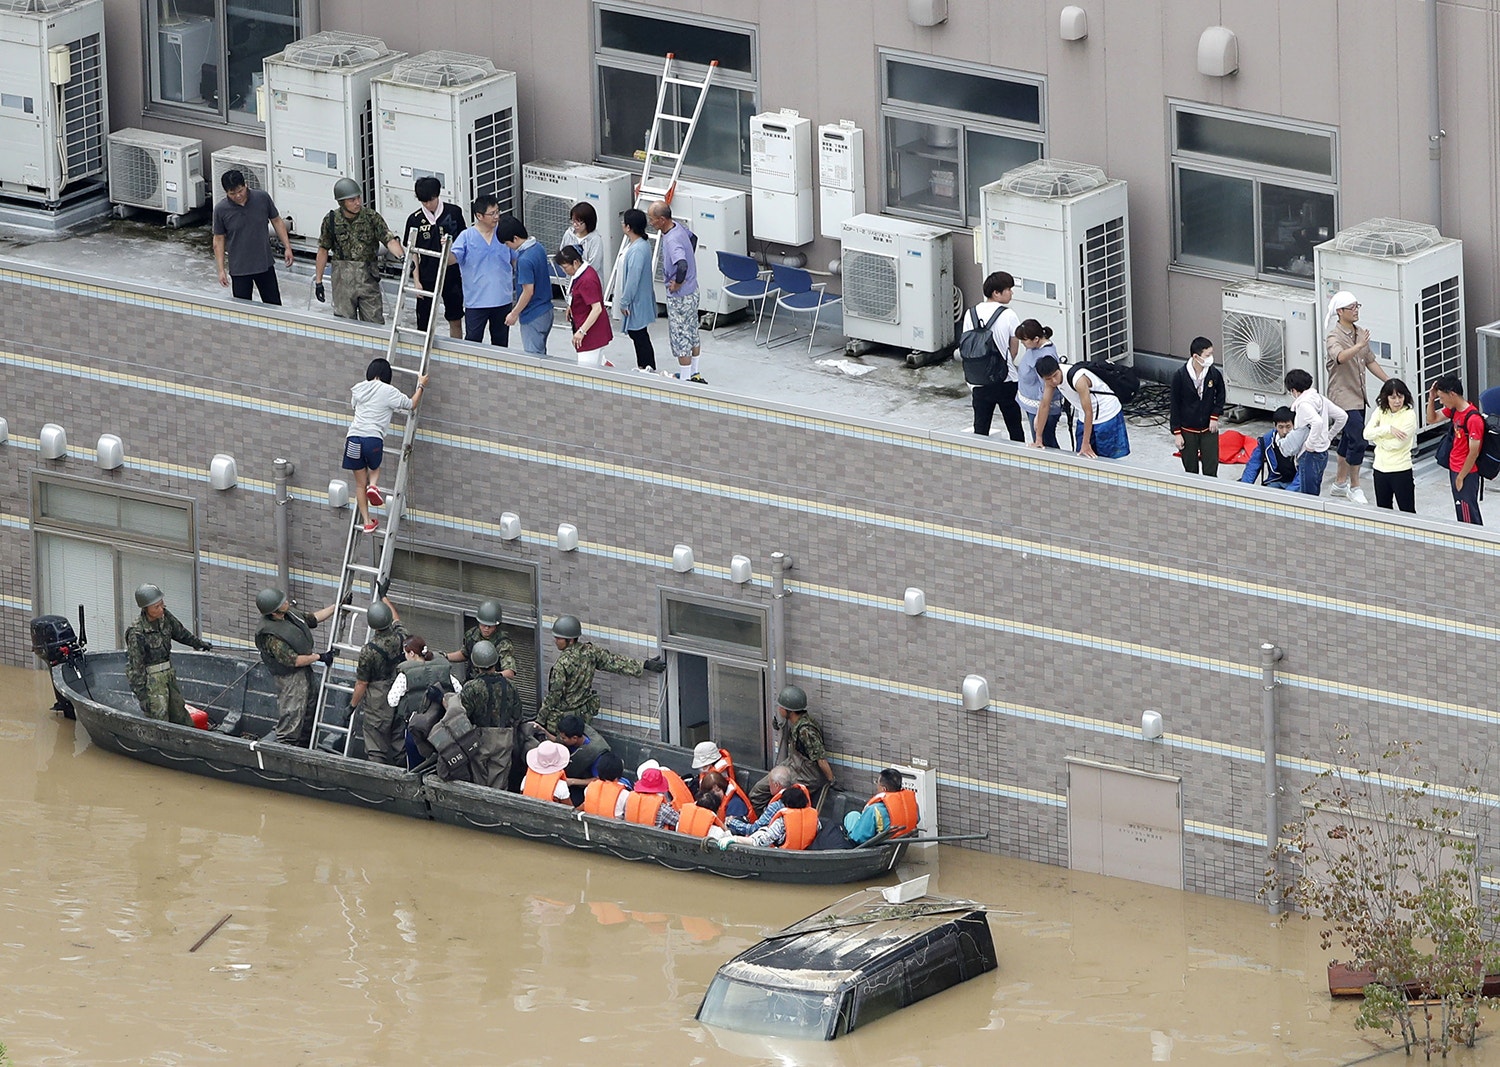  Foto: Kyodo via Reuters 